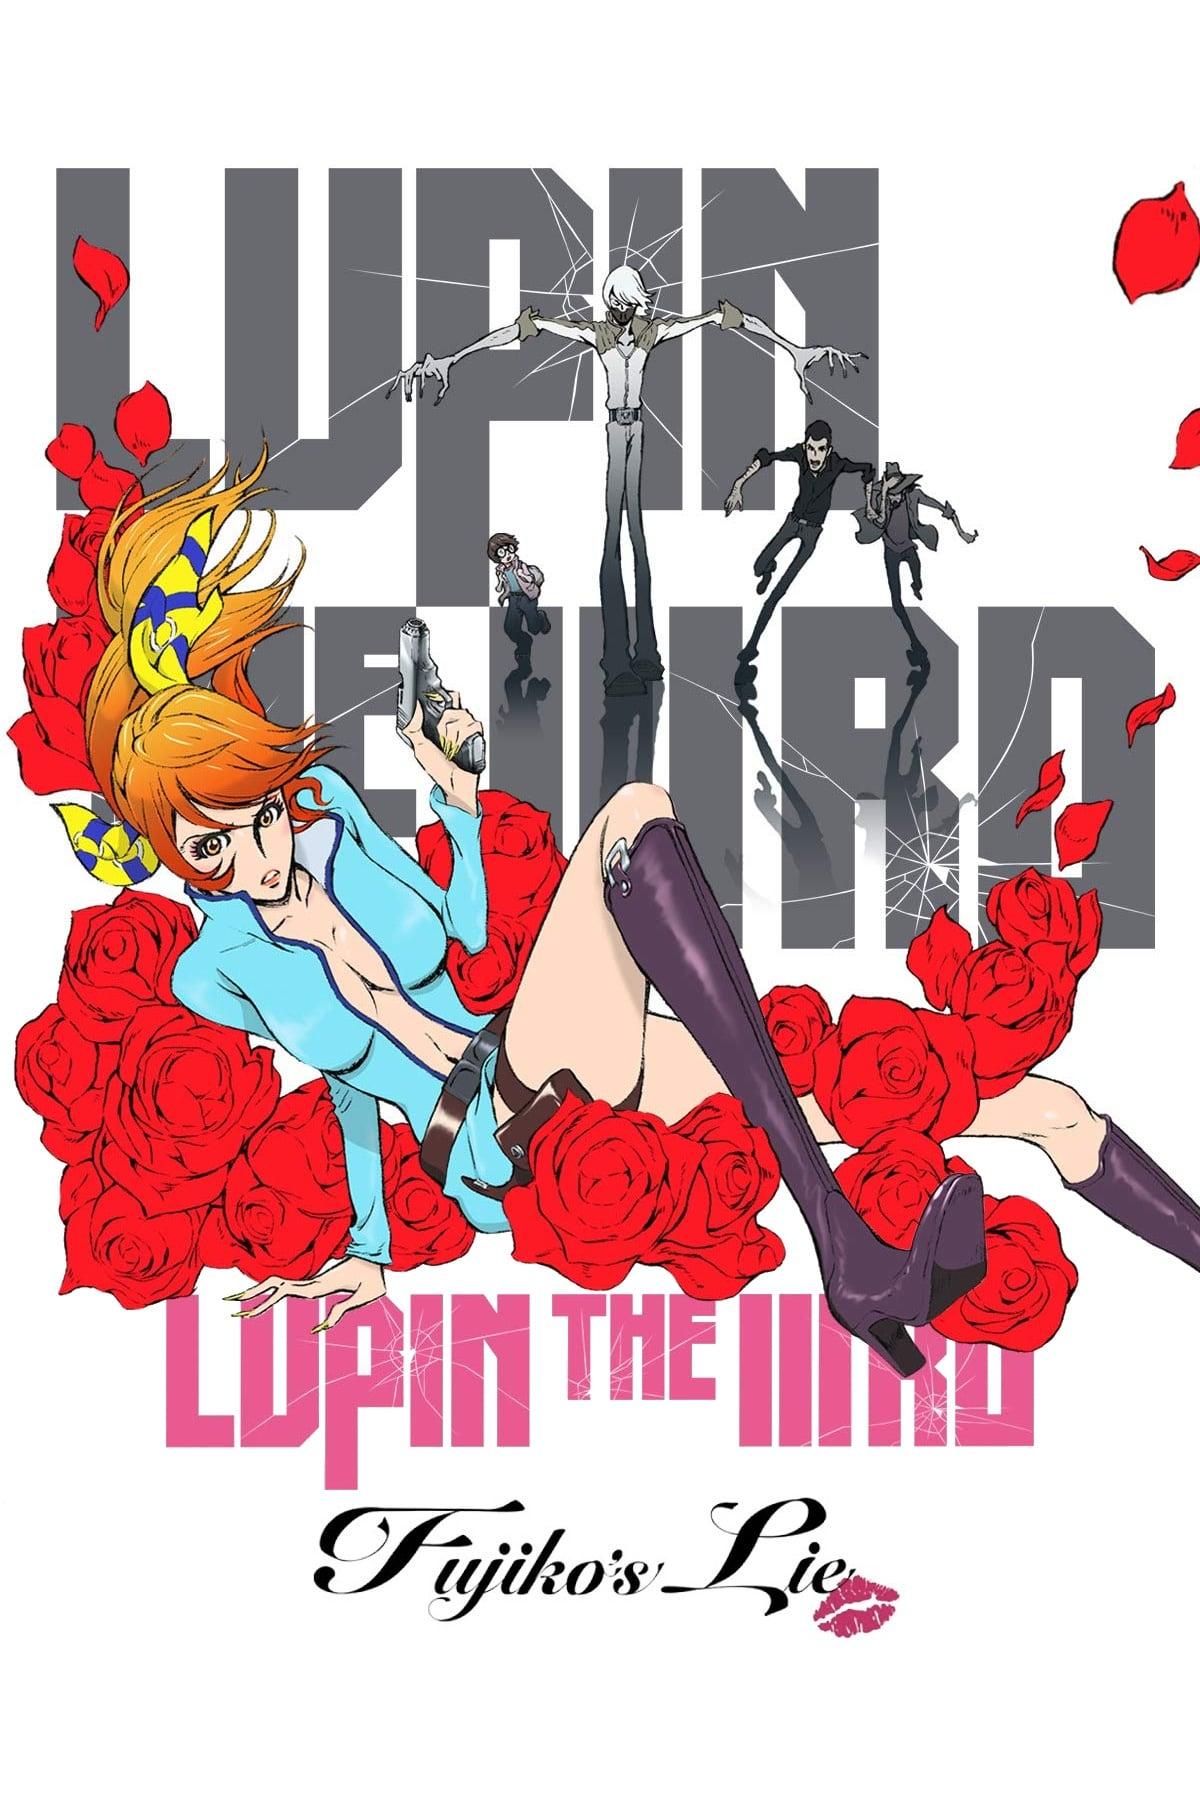 Lupin the Third: Fujiko's Lie poster